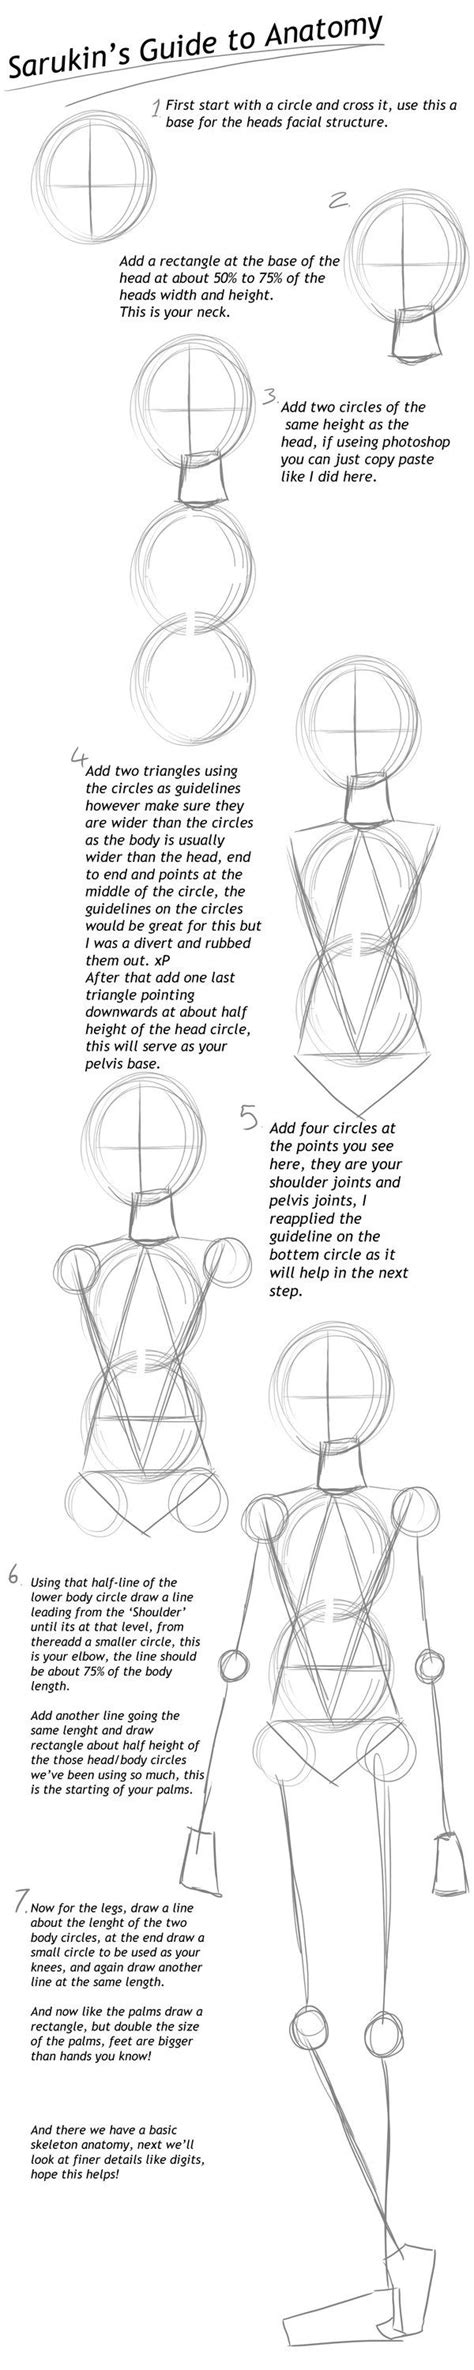 Basic Anatomy Guide By Sarukin On Deviantart Drawing People Anatomy